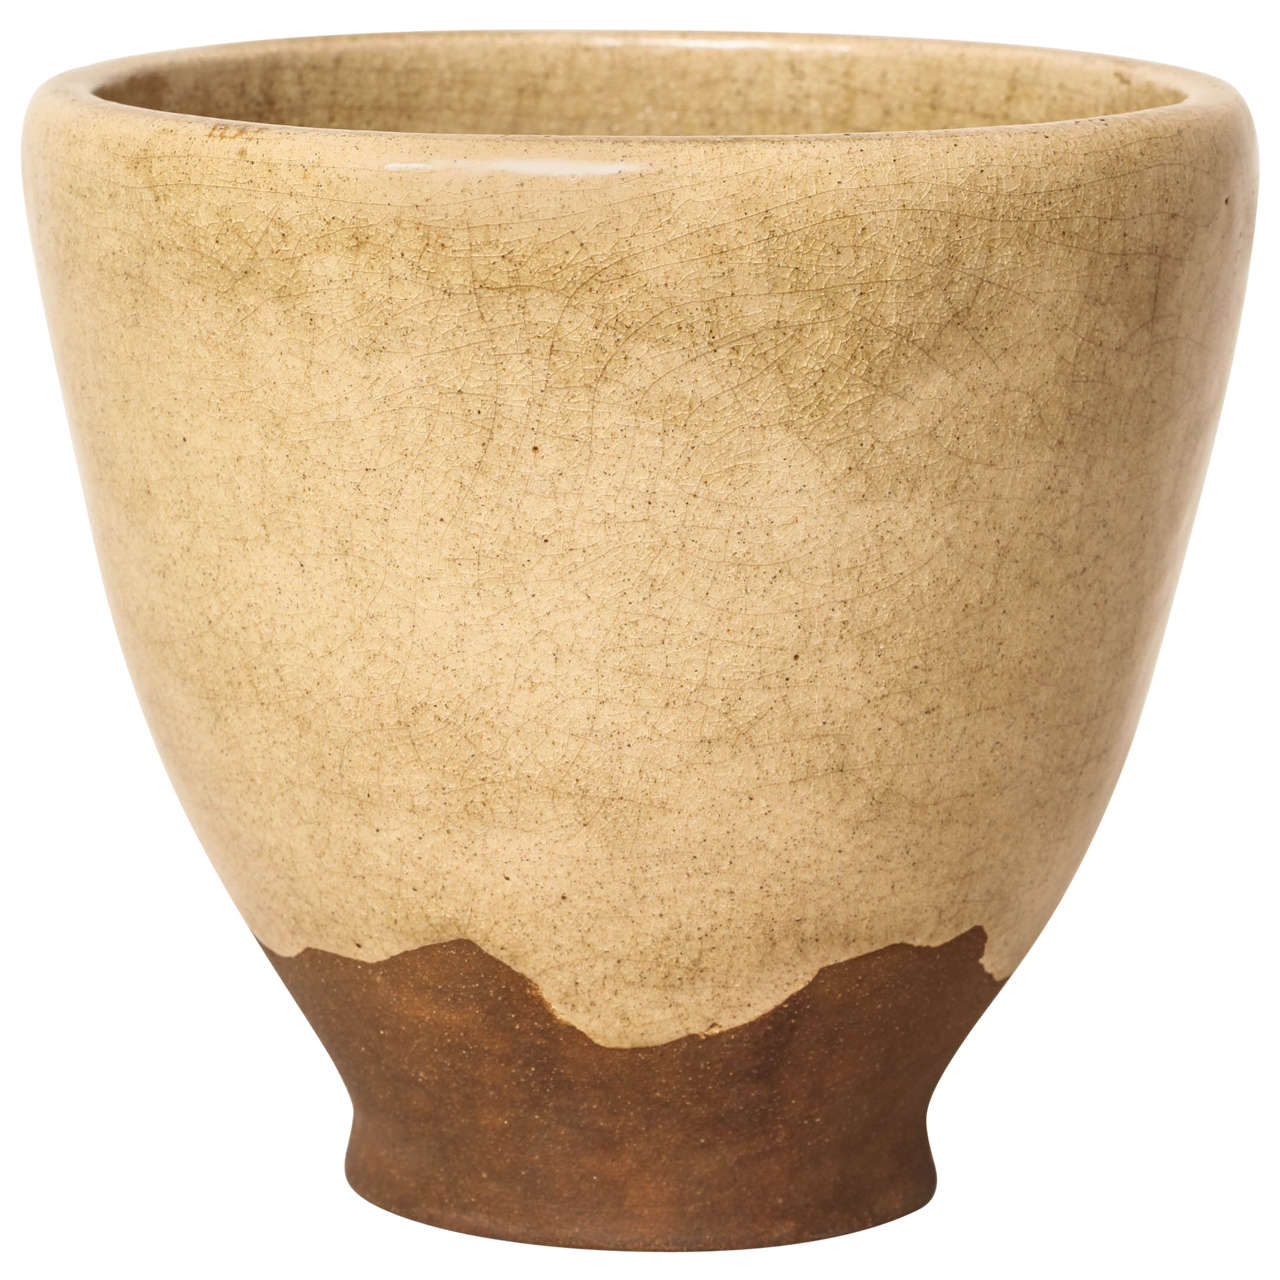 Henri Simmen French Art Deco Beige or Light Brown Stoneware Vase For Sale